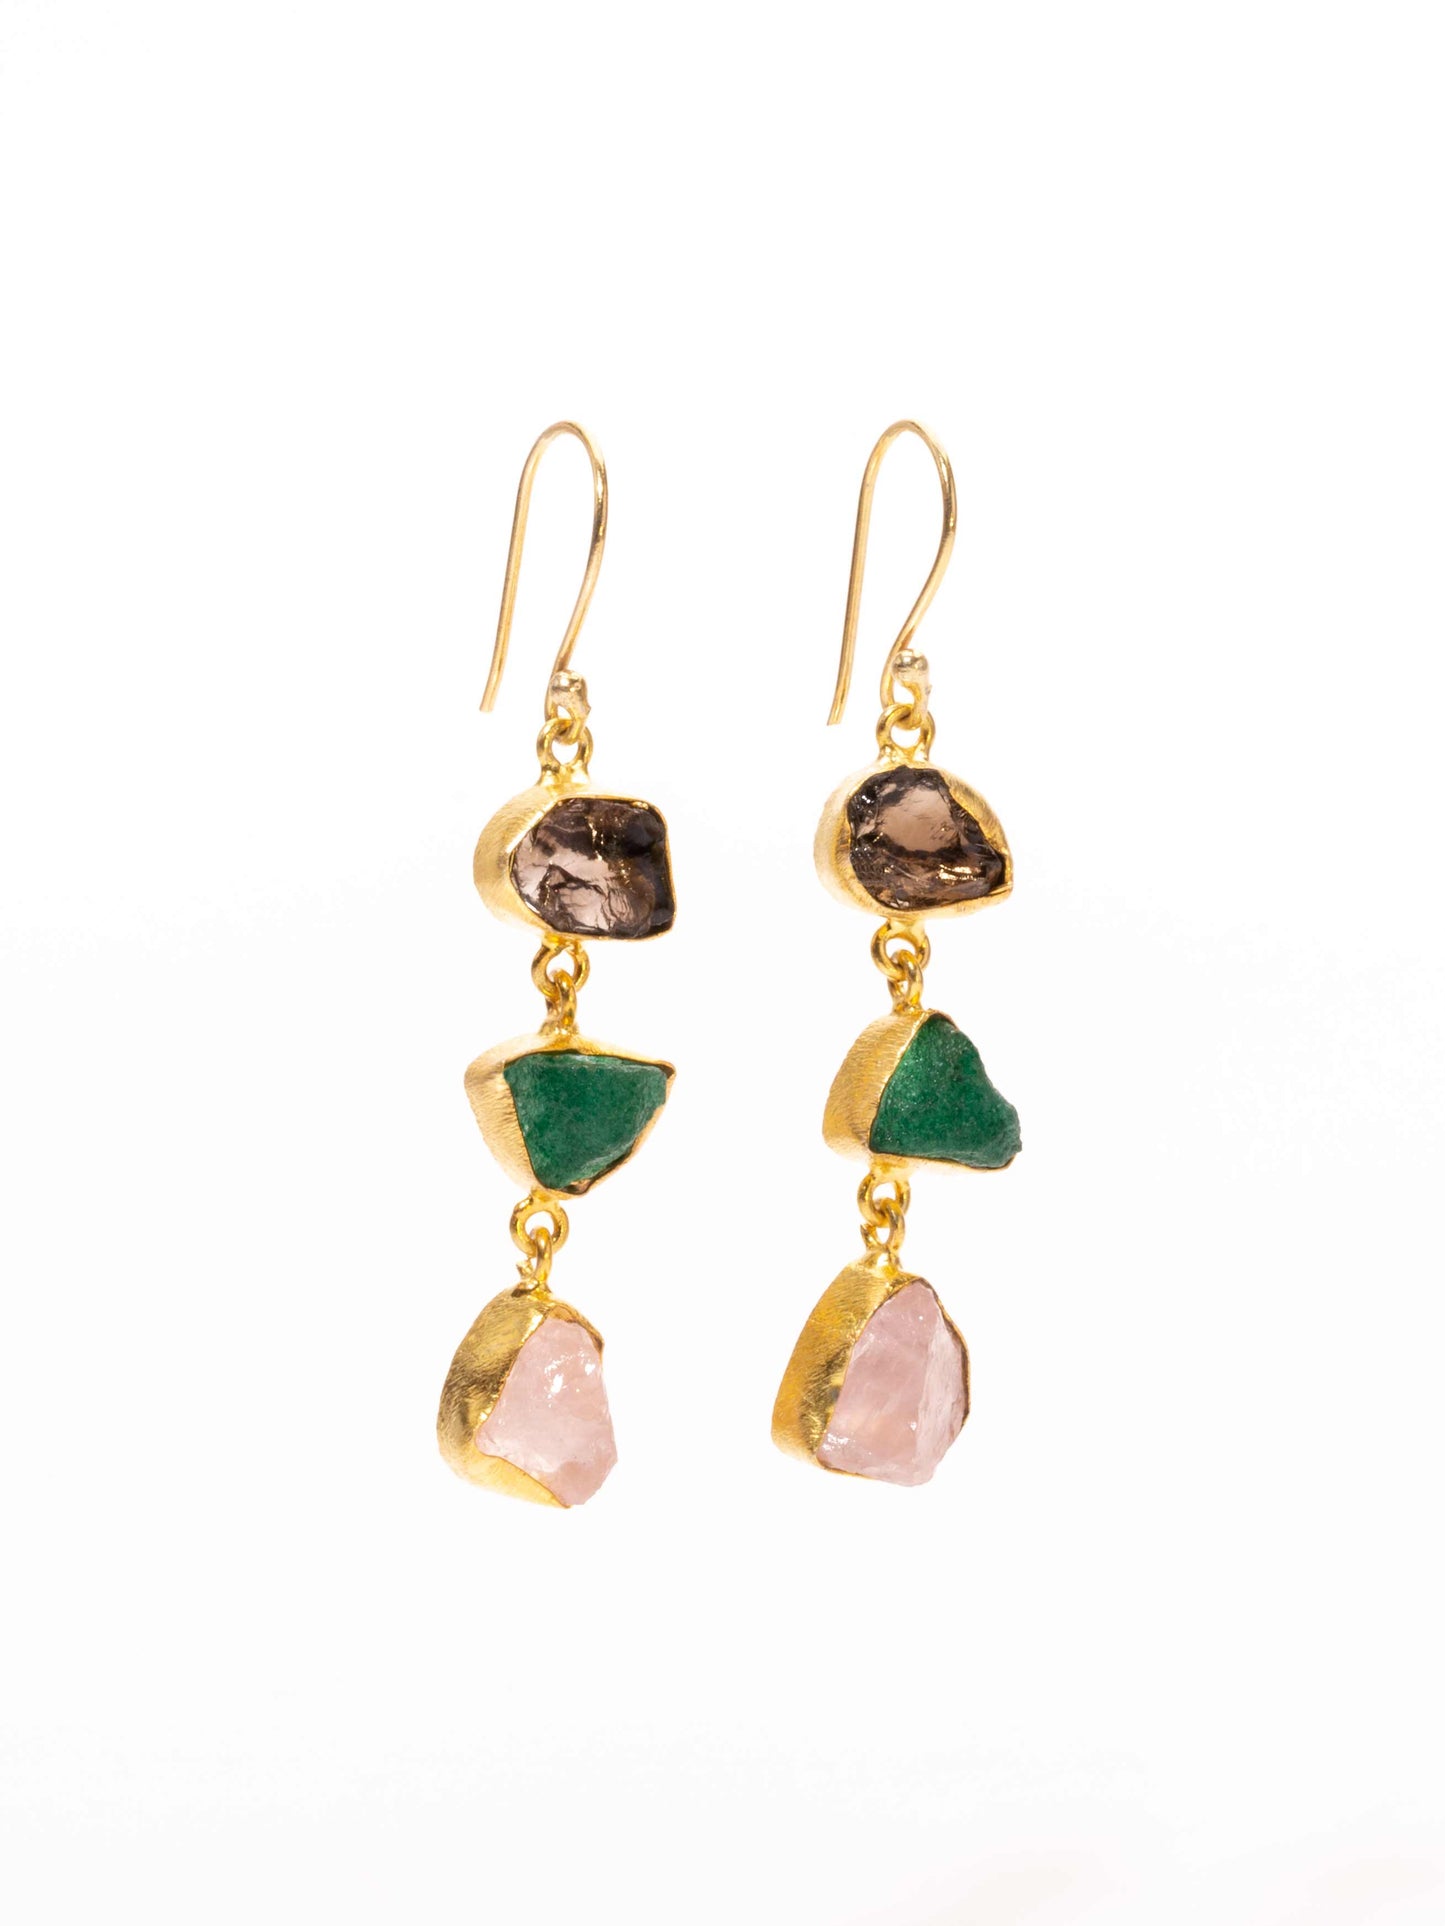 Gold Luxe earrings - Smokey quartz, aventurine and rose quartz